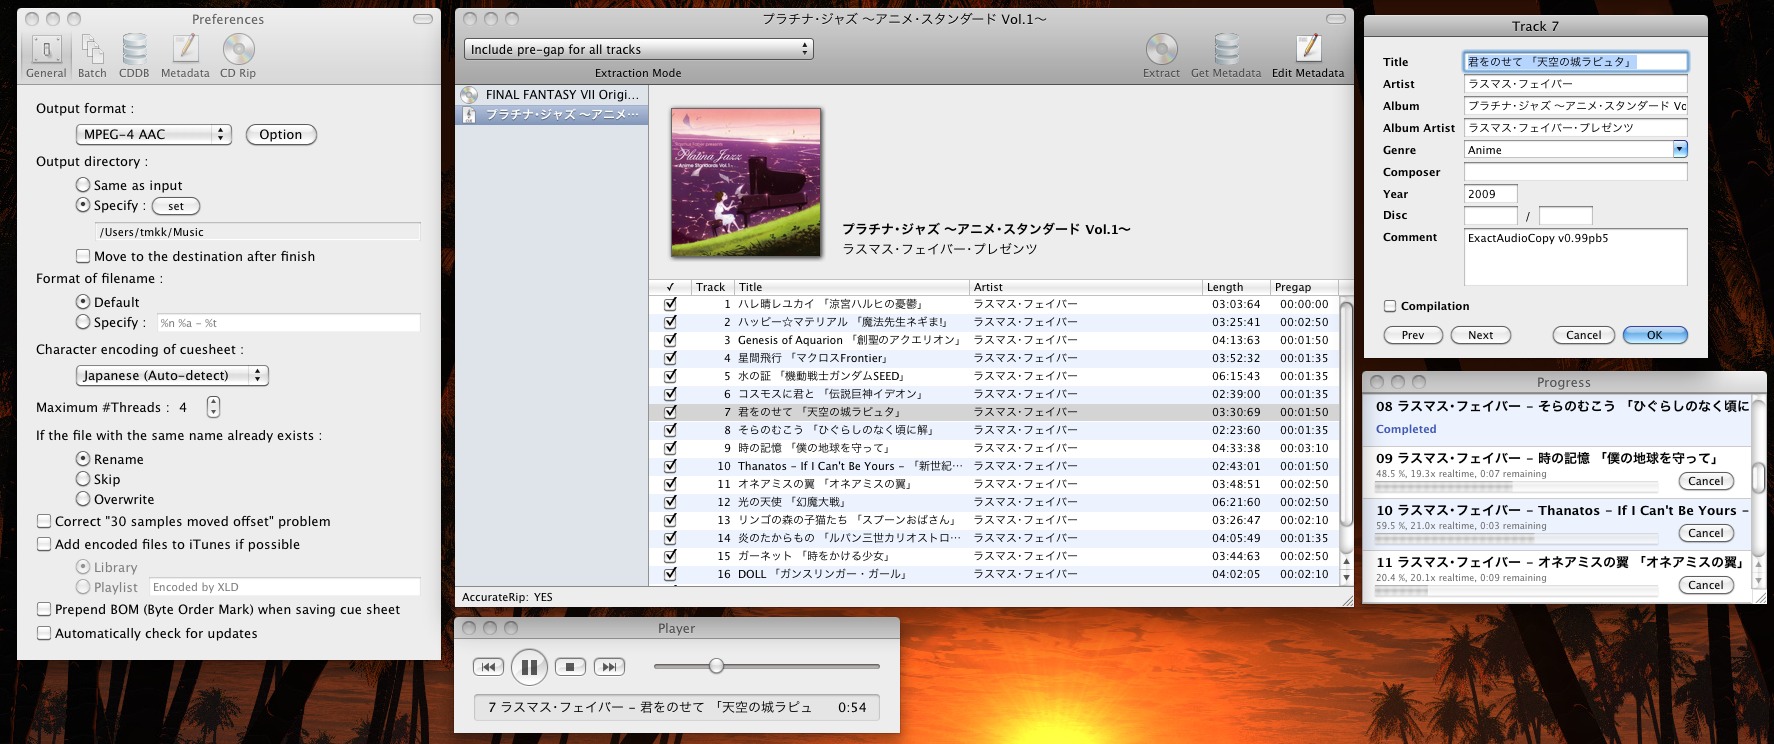 Xld Download Mac Os X